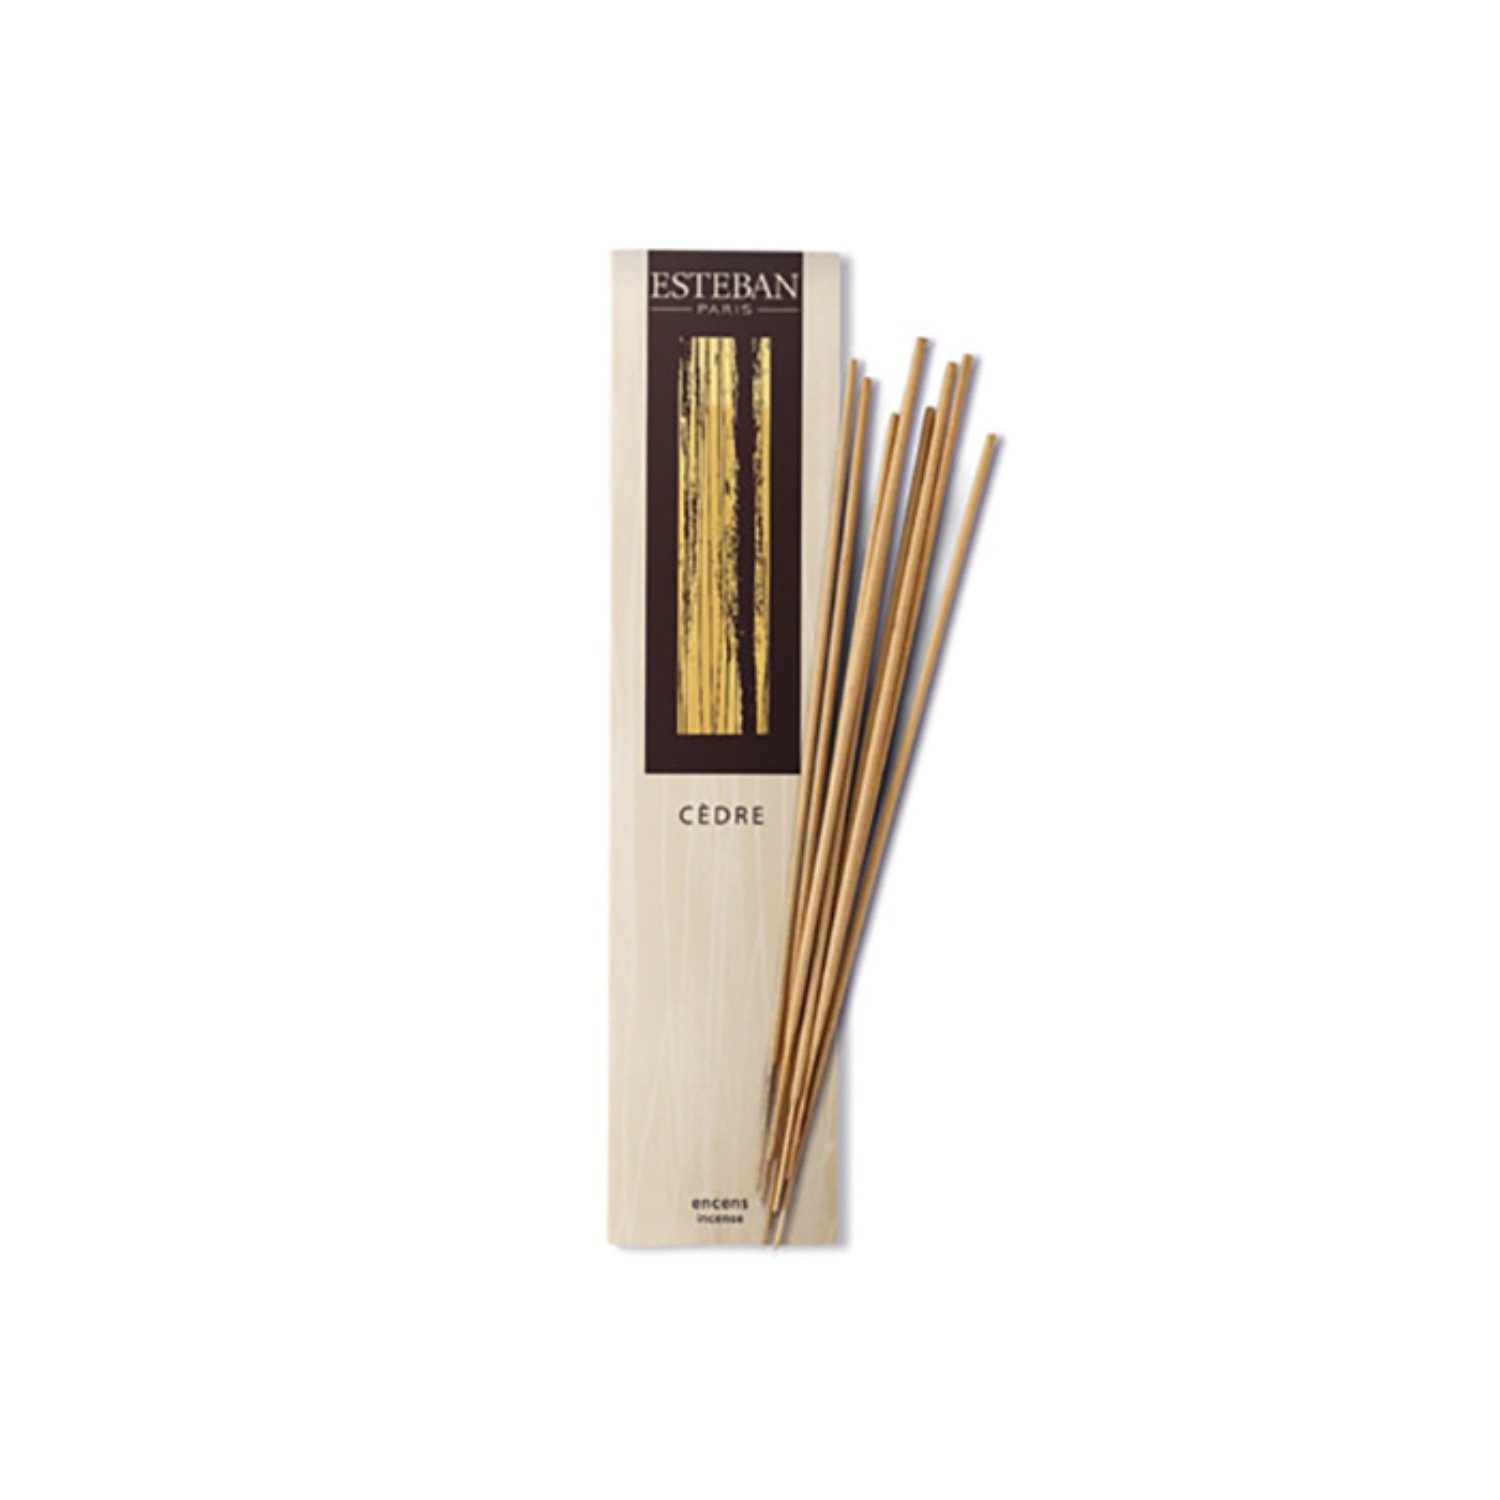 esteban cedre bamboo incense stick